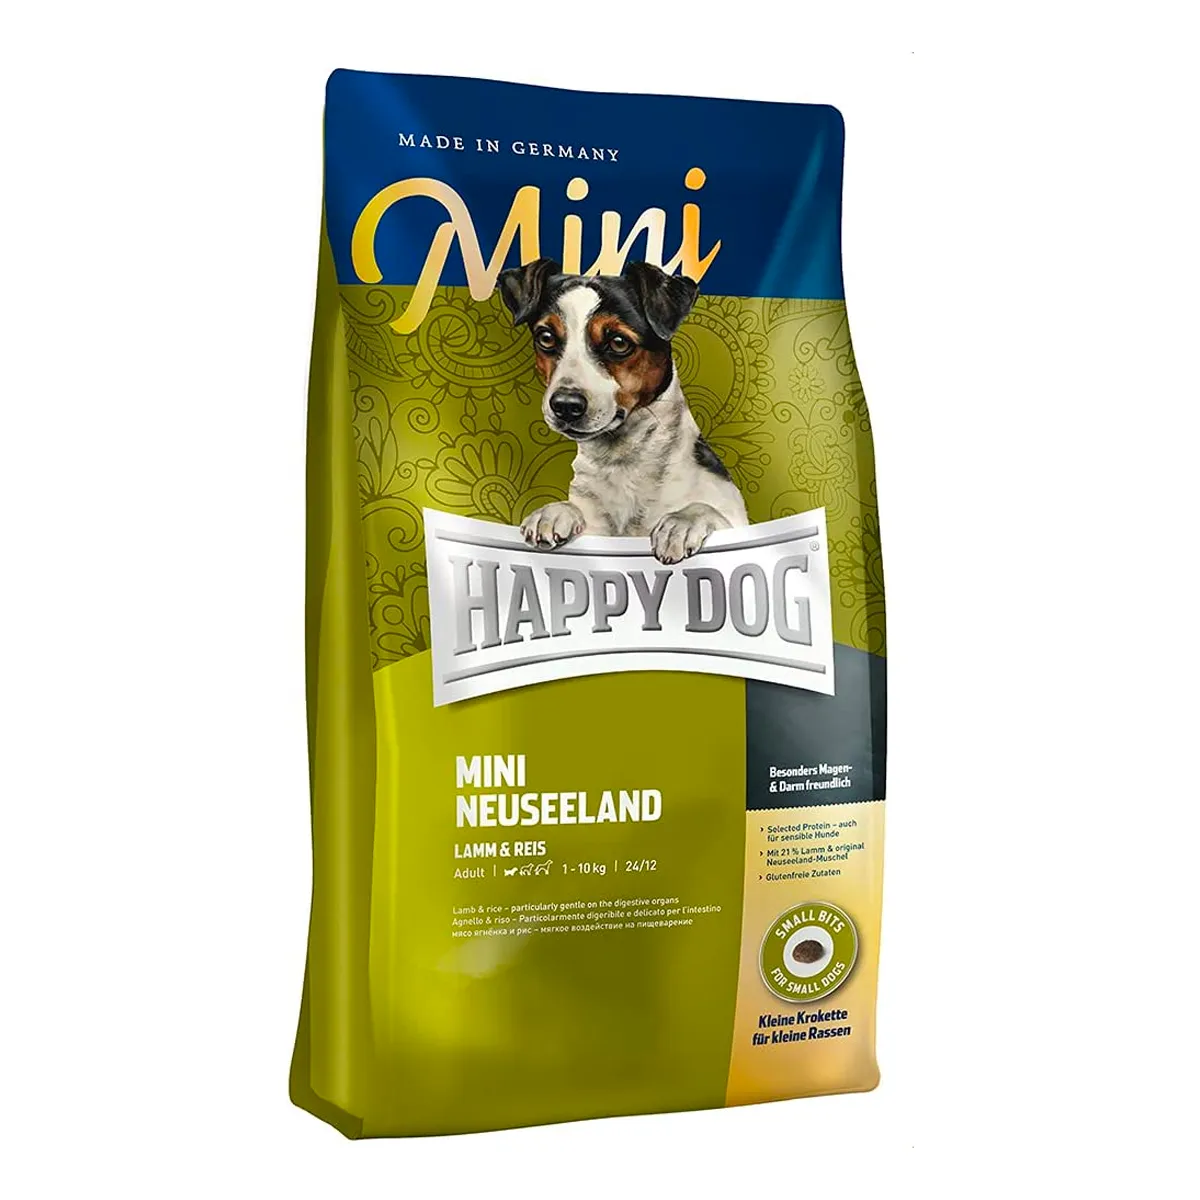 HAPPY DOG ミニ ニュージーランド